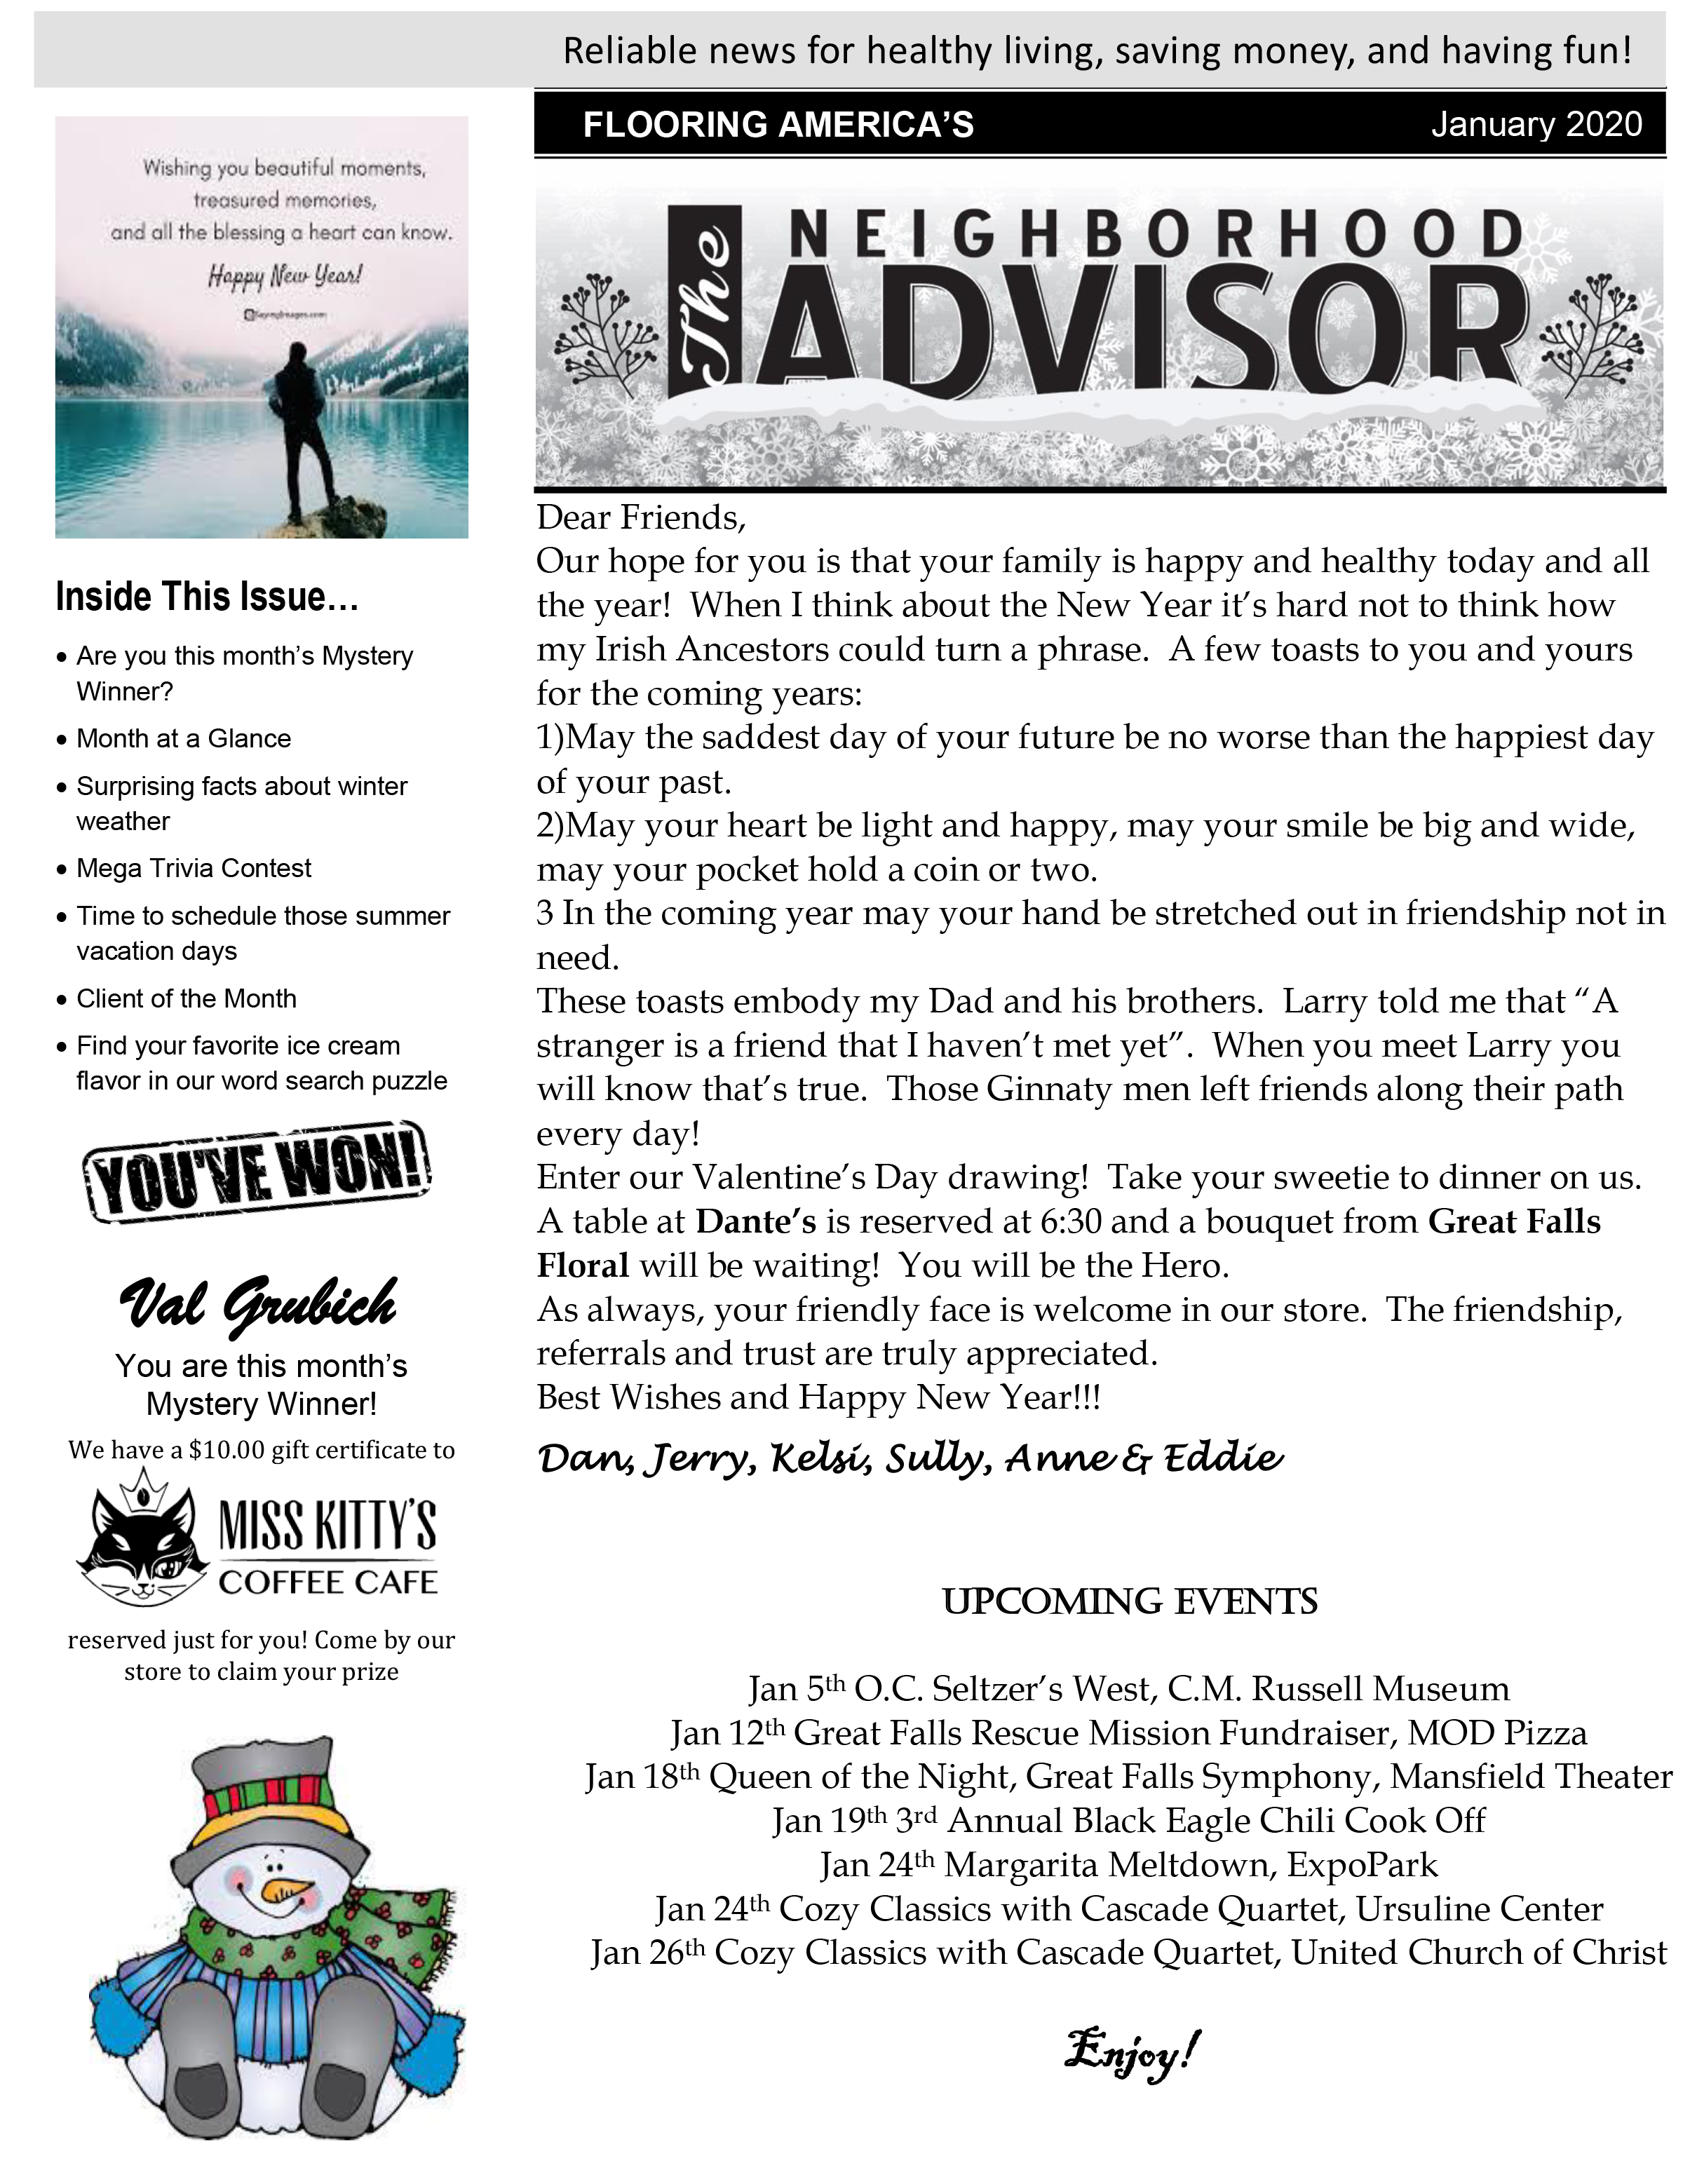 January Issue of The Neighborhood Adviser - Page 1